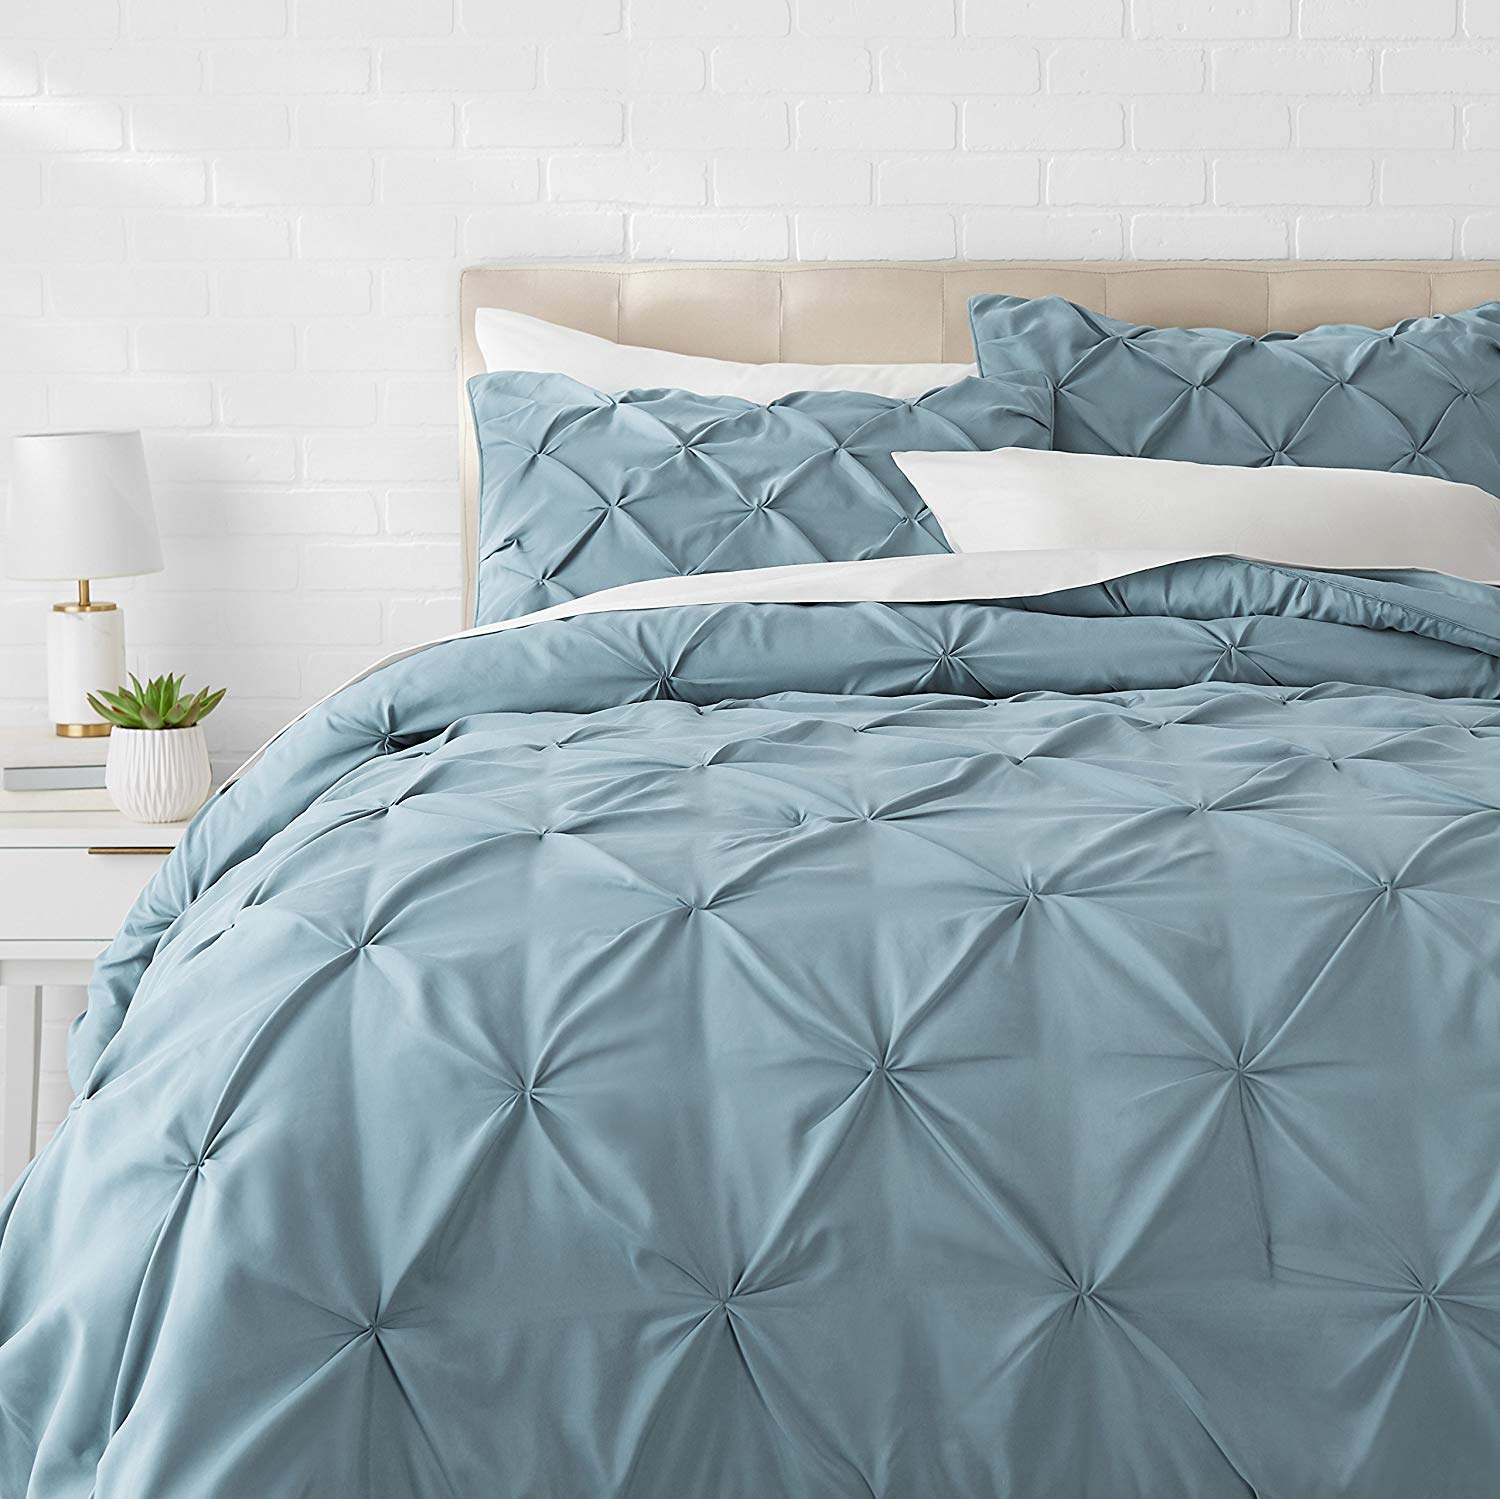 AmazonBasics Spa Blue Pleat Comforter Bedding Set